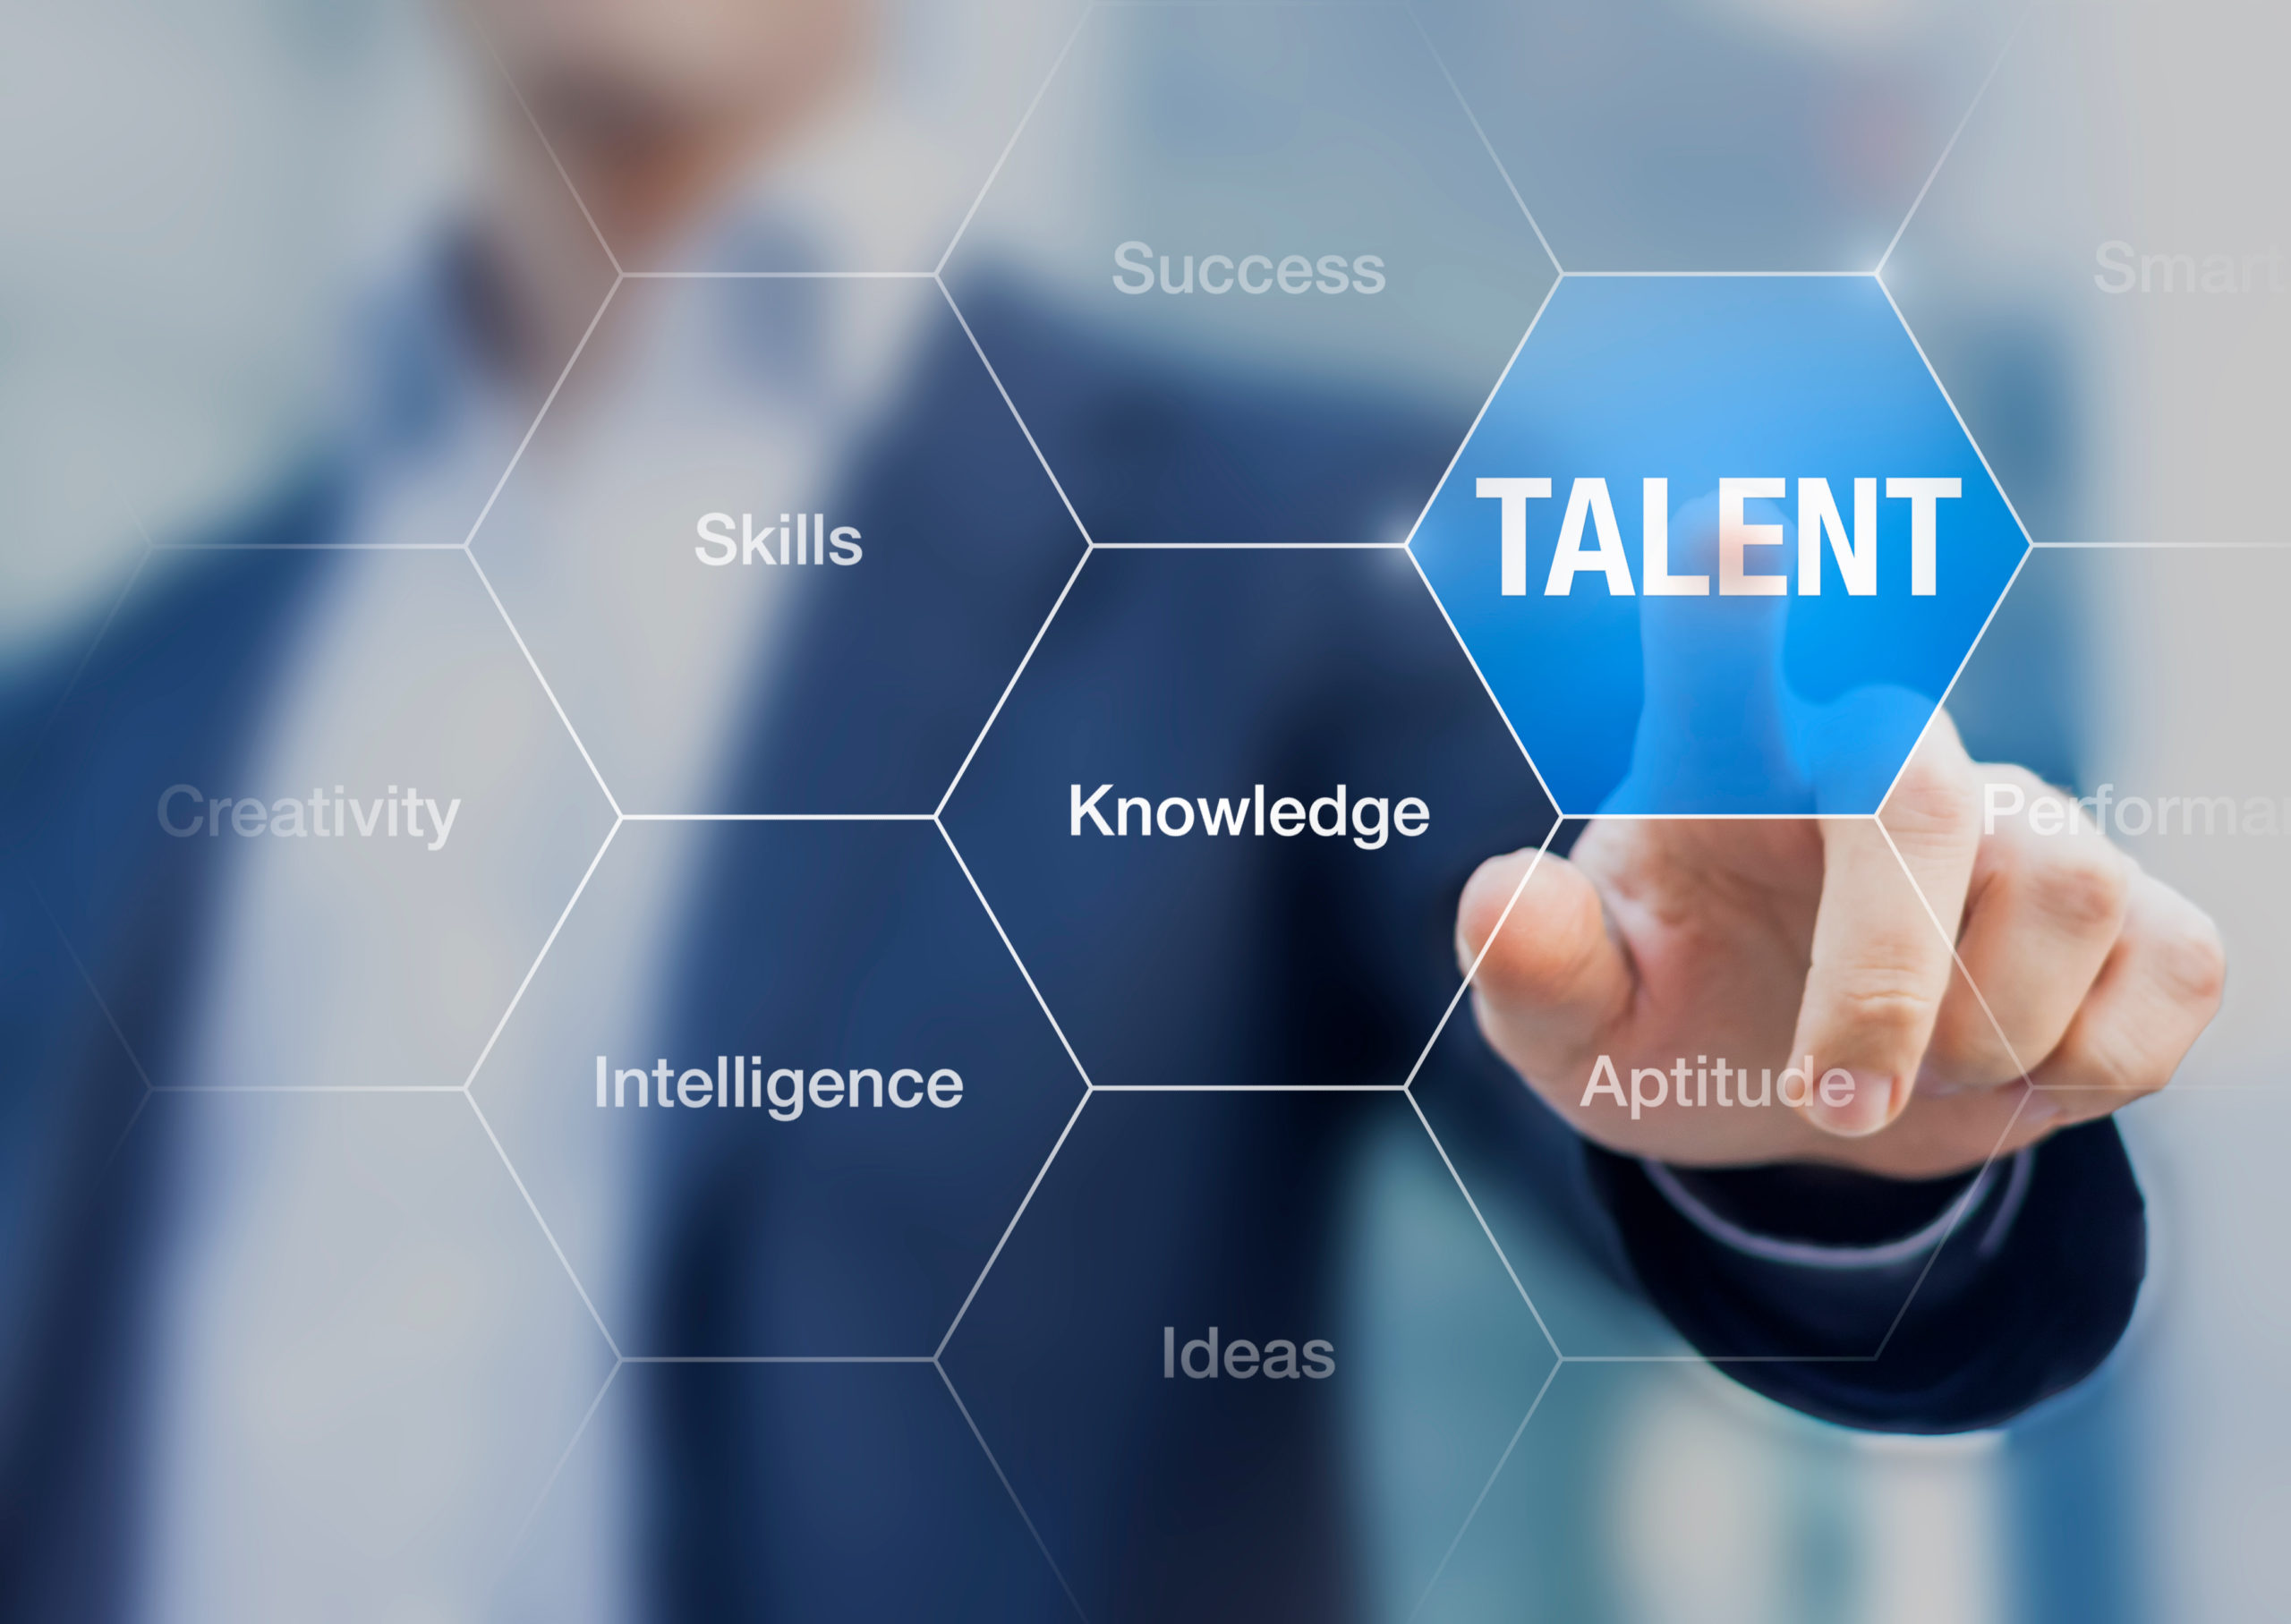 talent based on skills employers